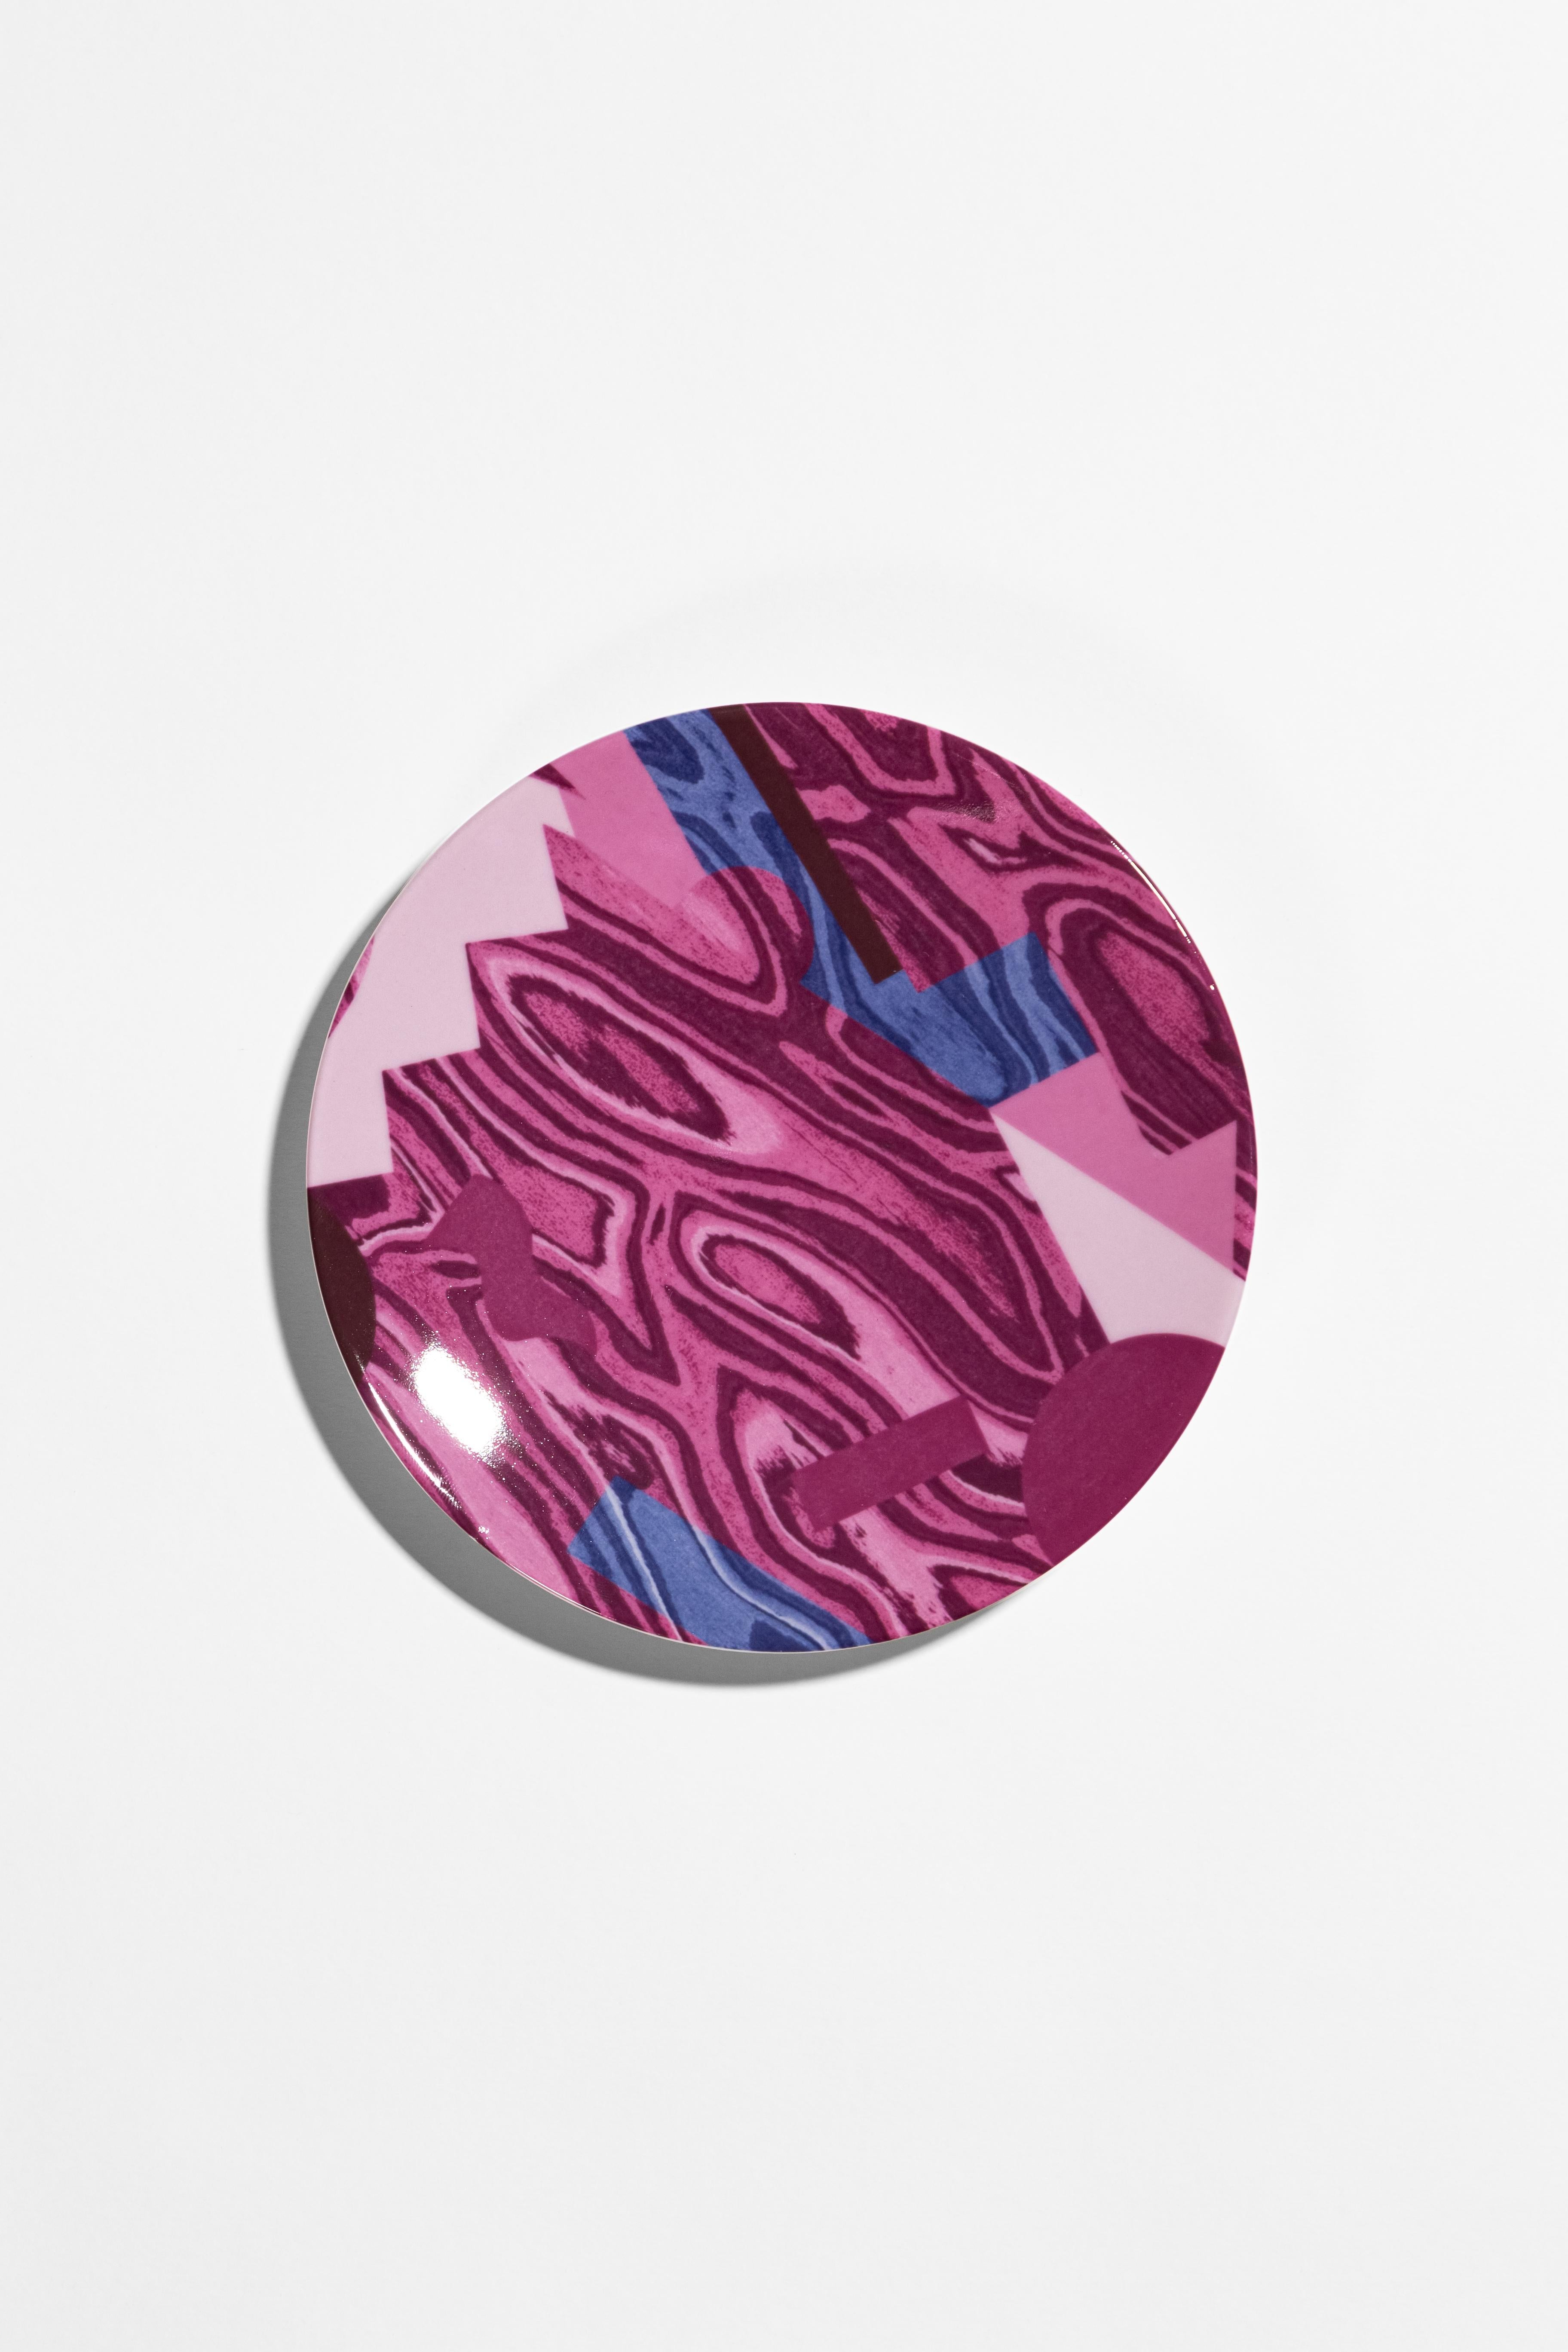 Alchimie, Six Contemporary Porcelain Bread Plates with Decorative Design For Sale 3